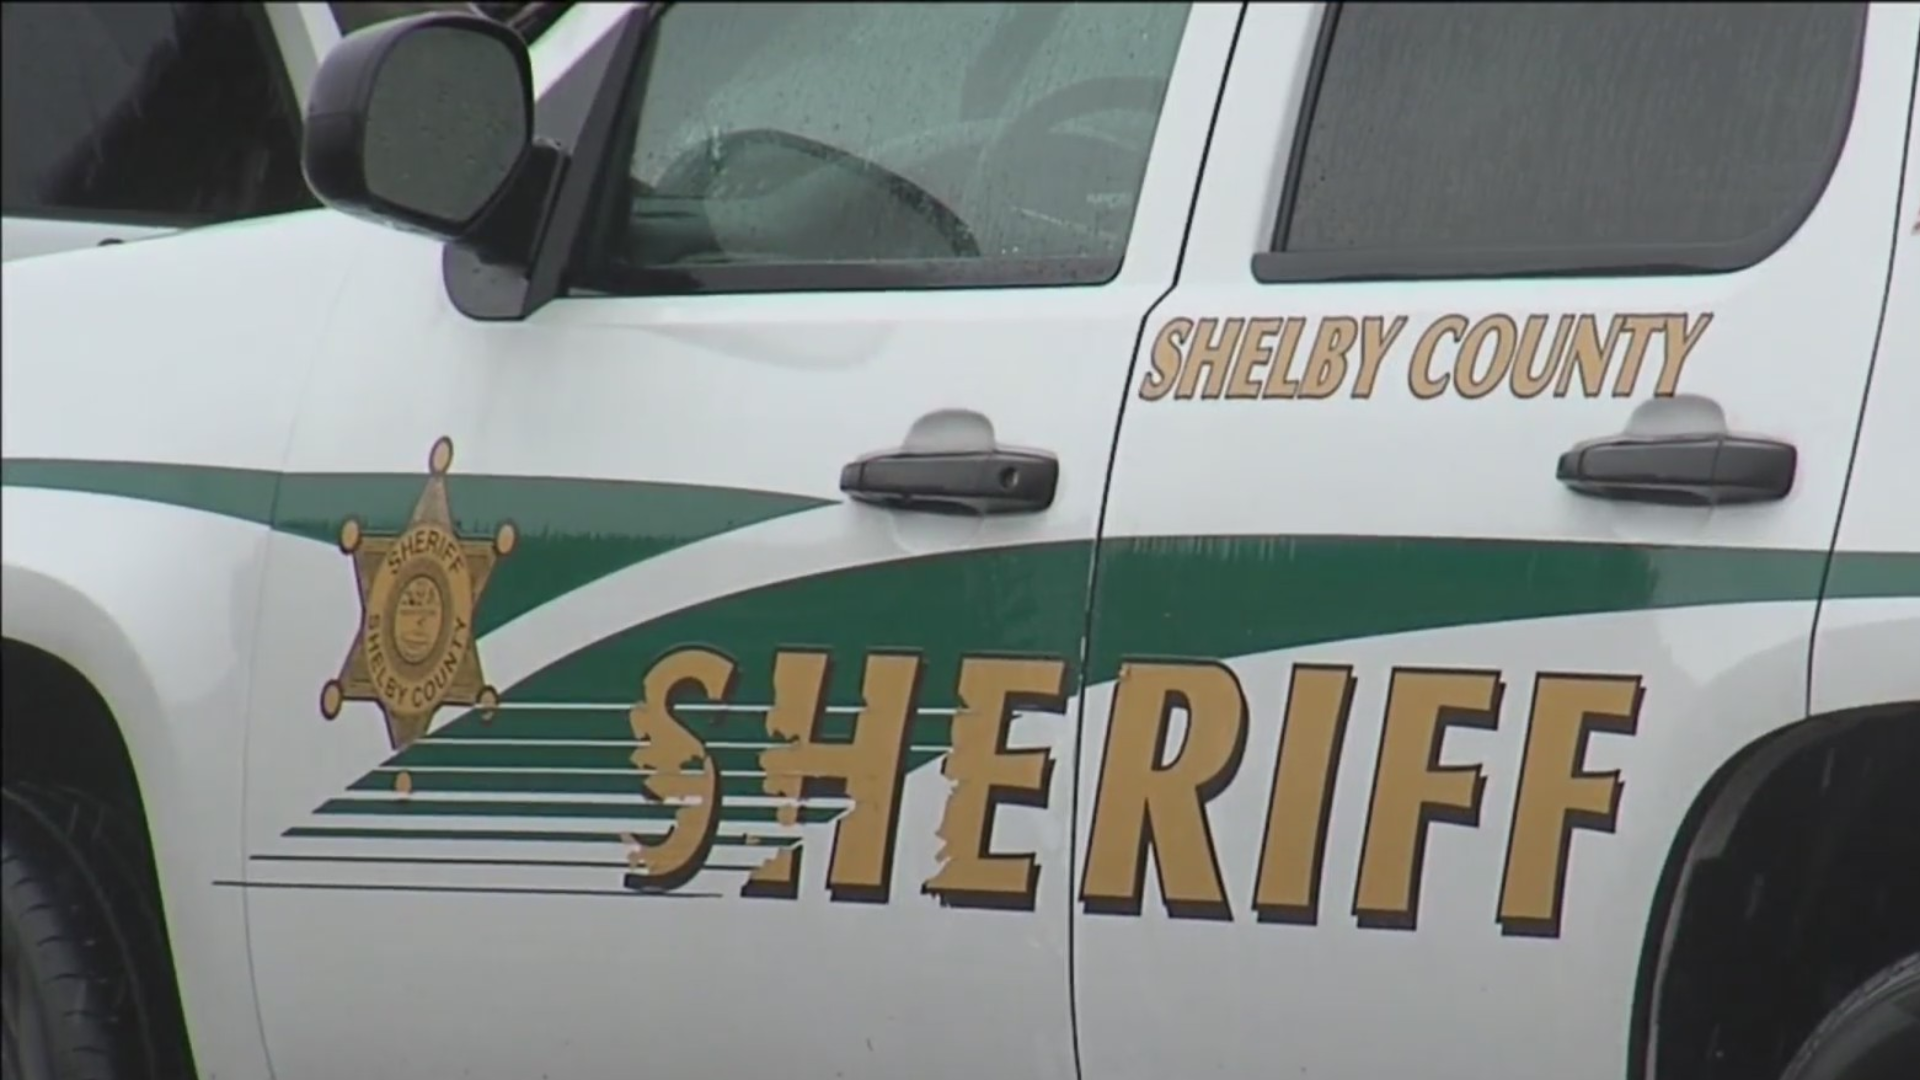 Shelby County Sheriff's Office has new website | localmemphis.com